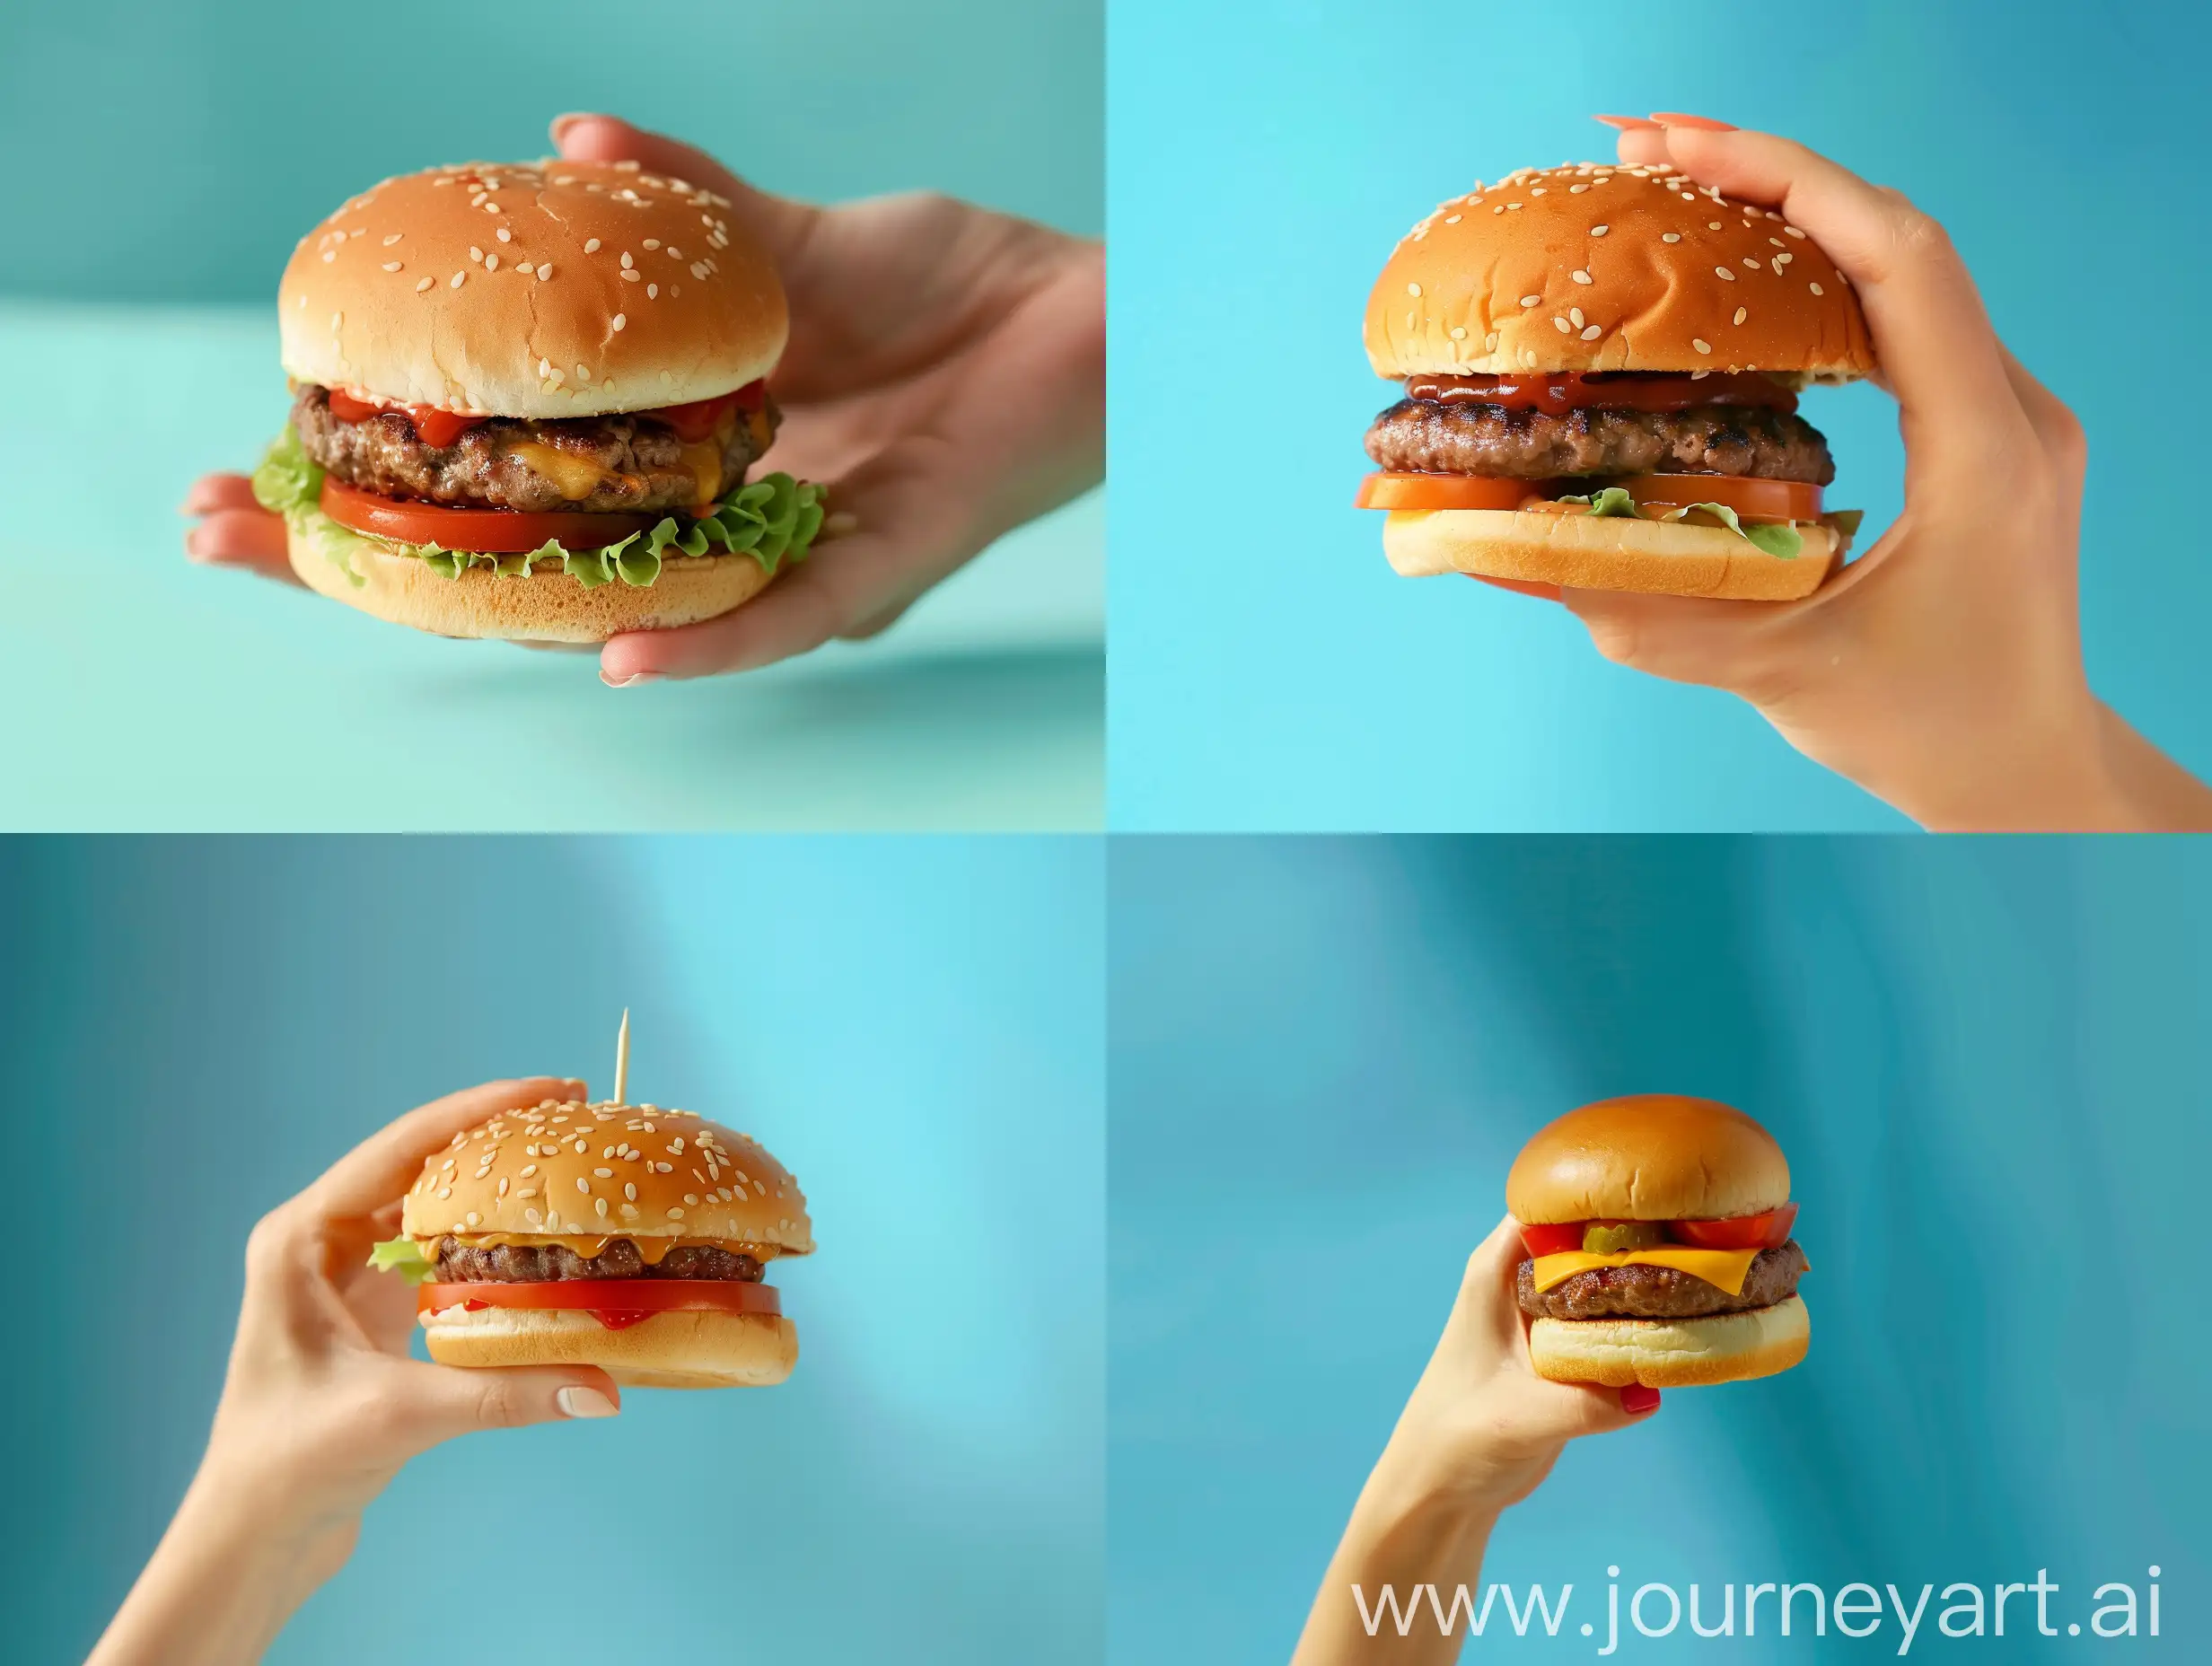 Delicious-Hamburger-Grasped-Firmly-in-Feminine-Hand-against-Vibrant-Blue-Background